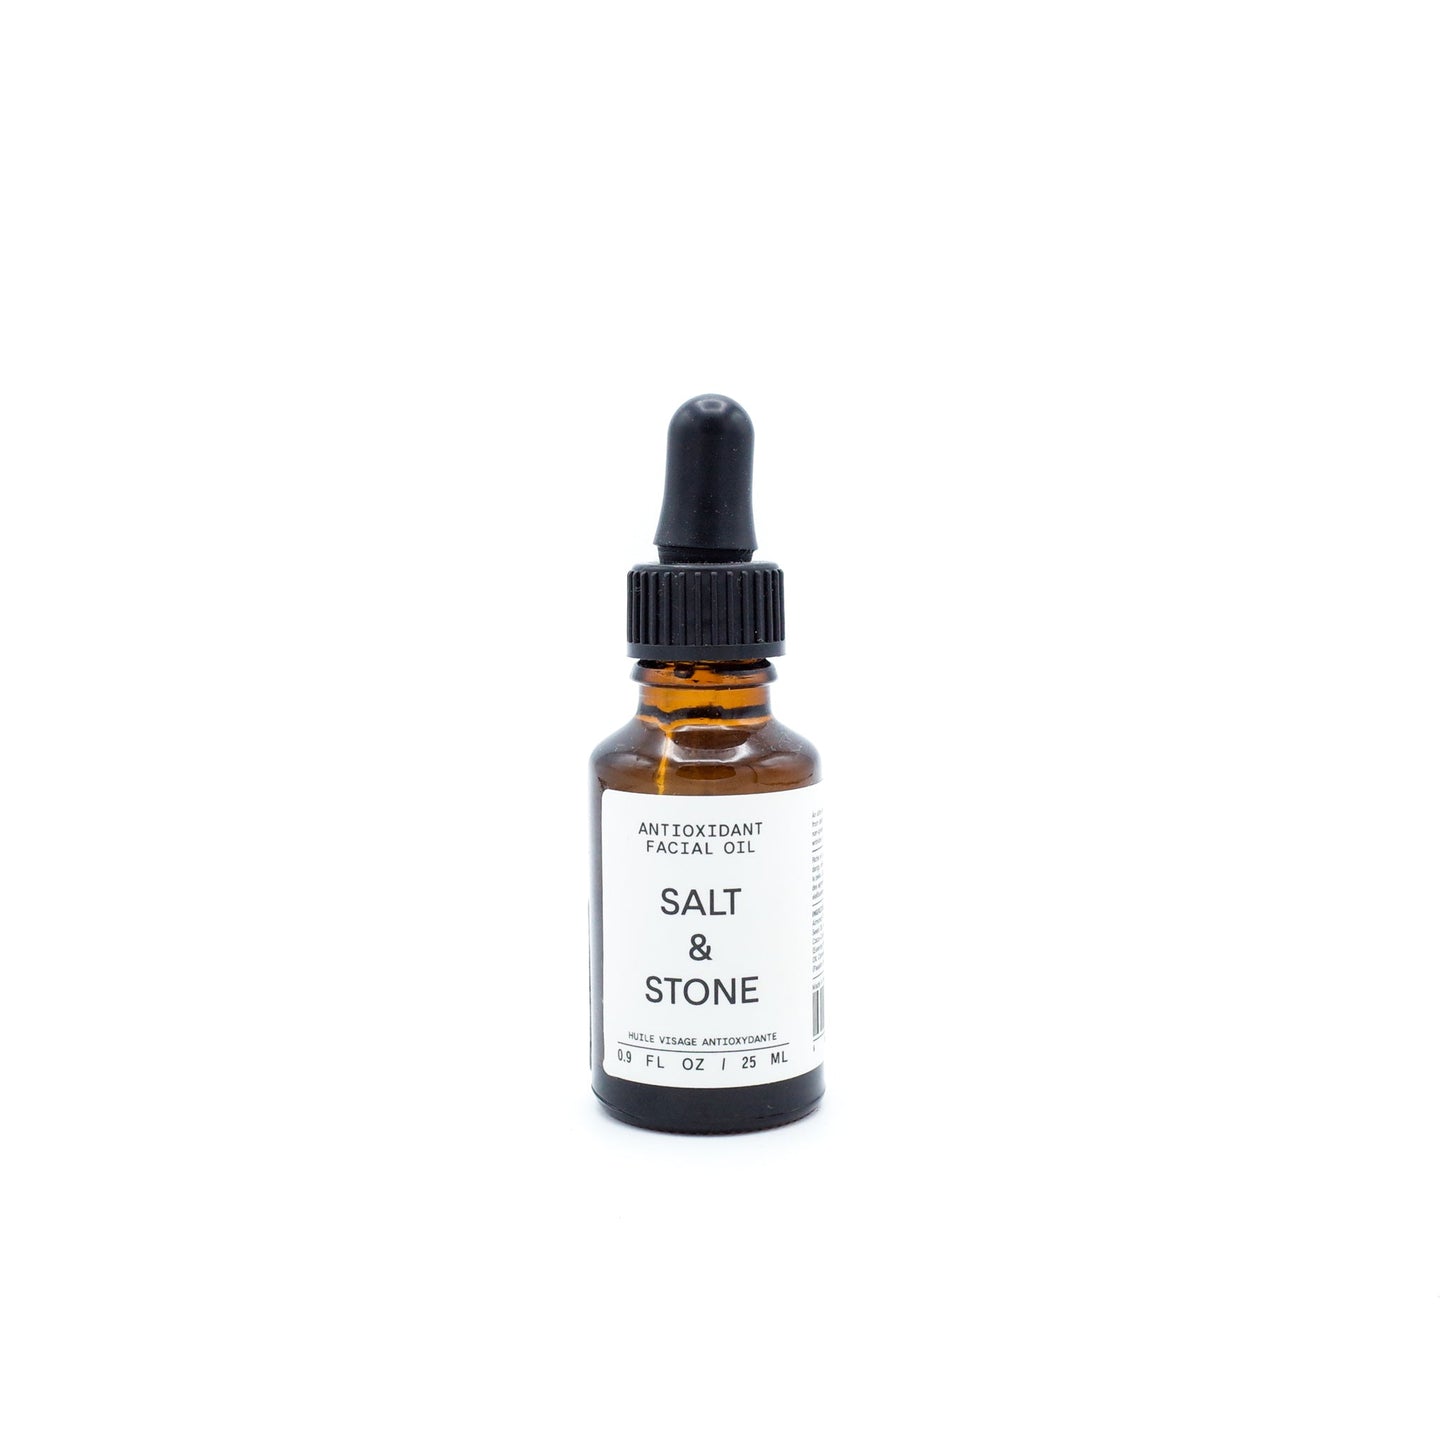 SALT & STONE Antioxidant Facial Oil Default Salt & Stone 